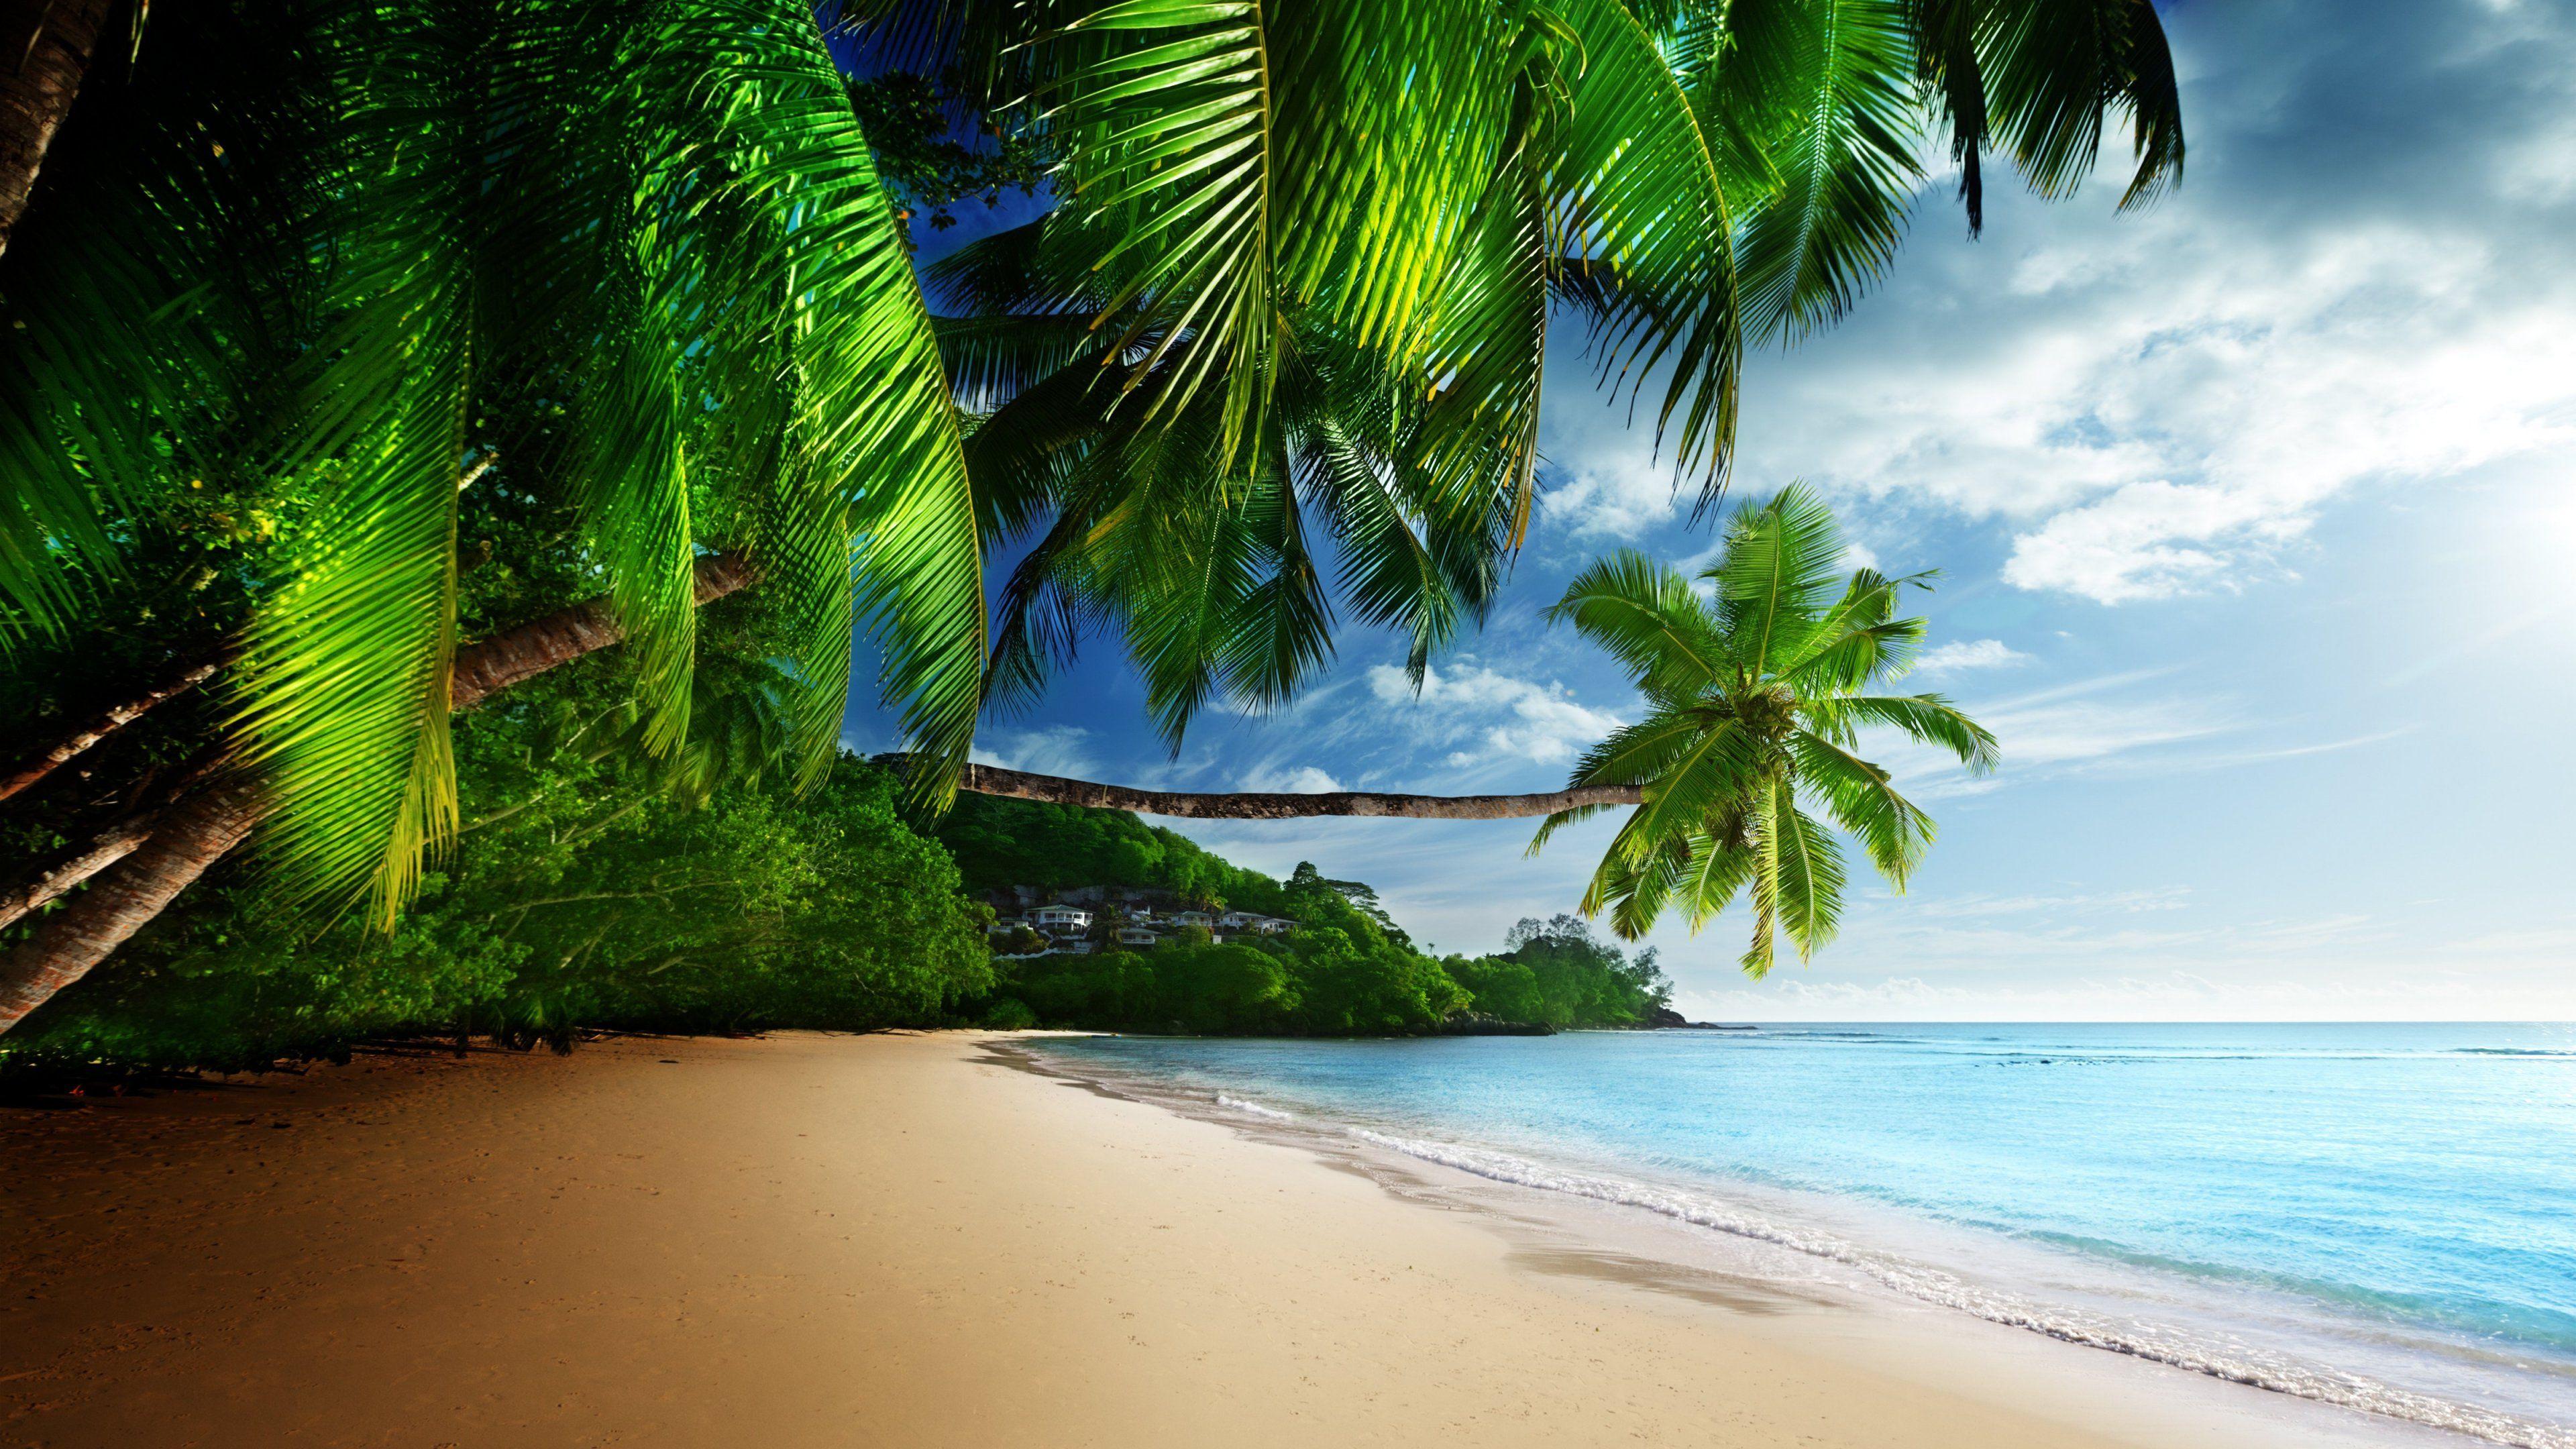 4K Ultra HD Beach Wallpapers - Top Free 4K Ultra HD Beach Backgrounds